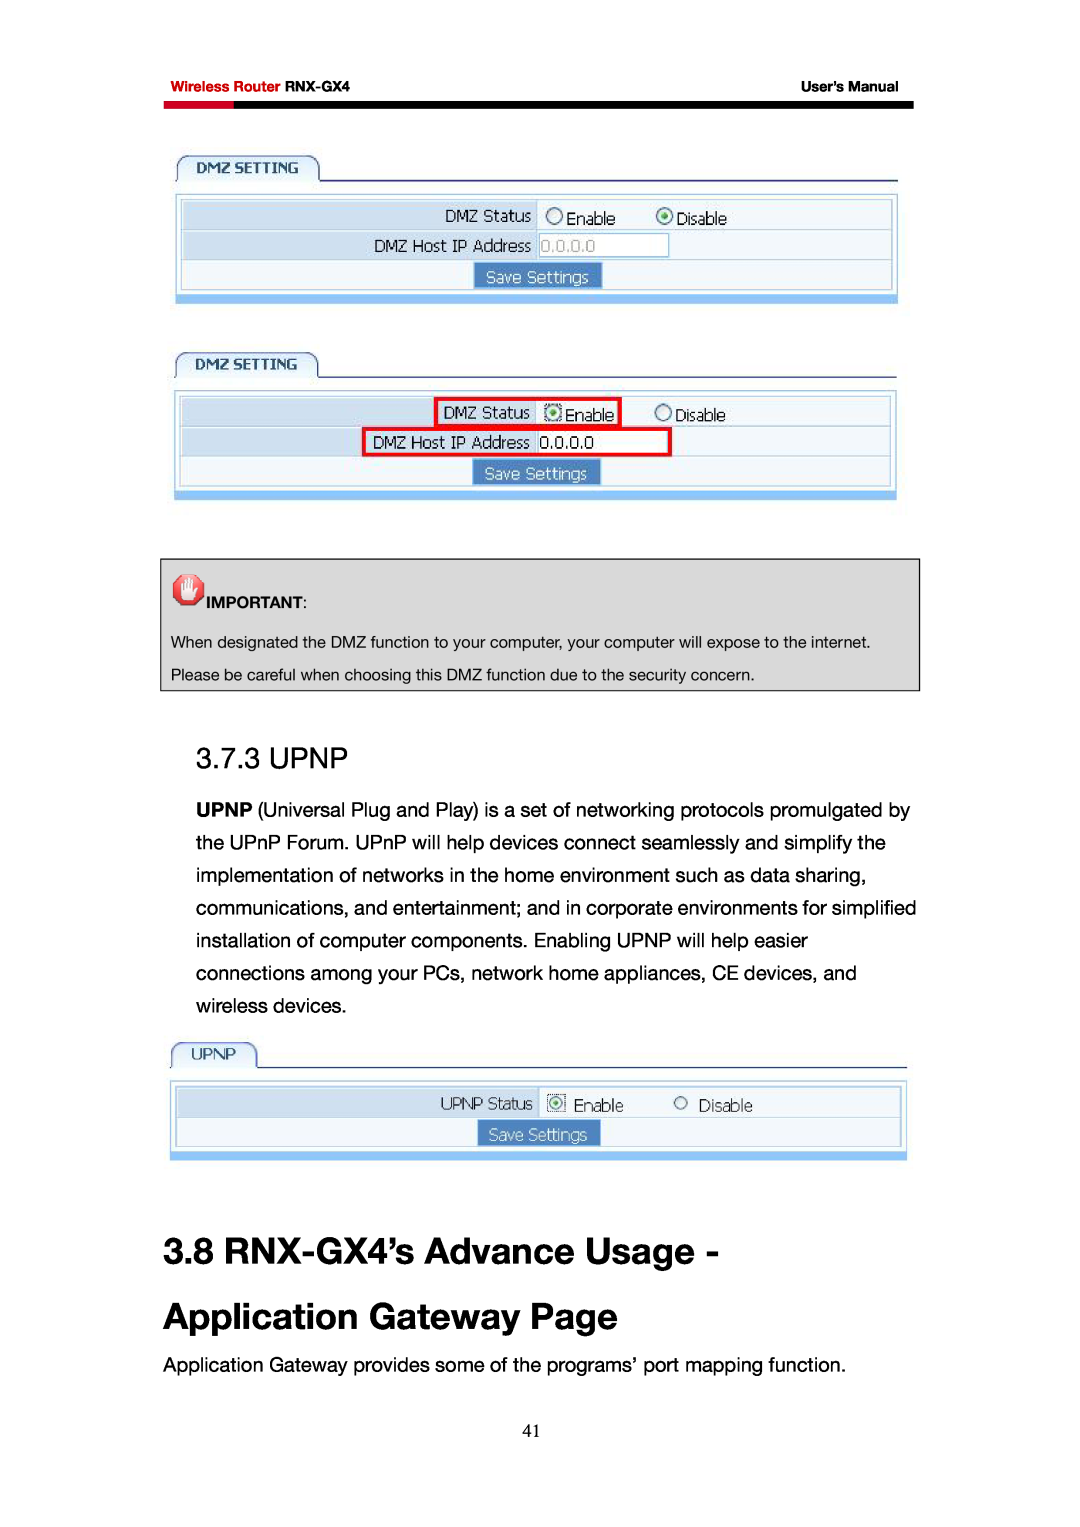 Rosewill user manual RNX-GX4’s Advance Usage Application Gateway Page, Upnp 